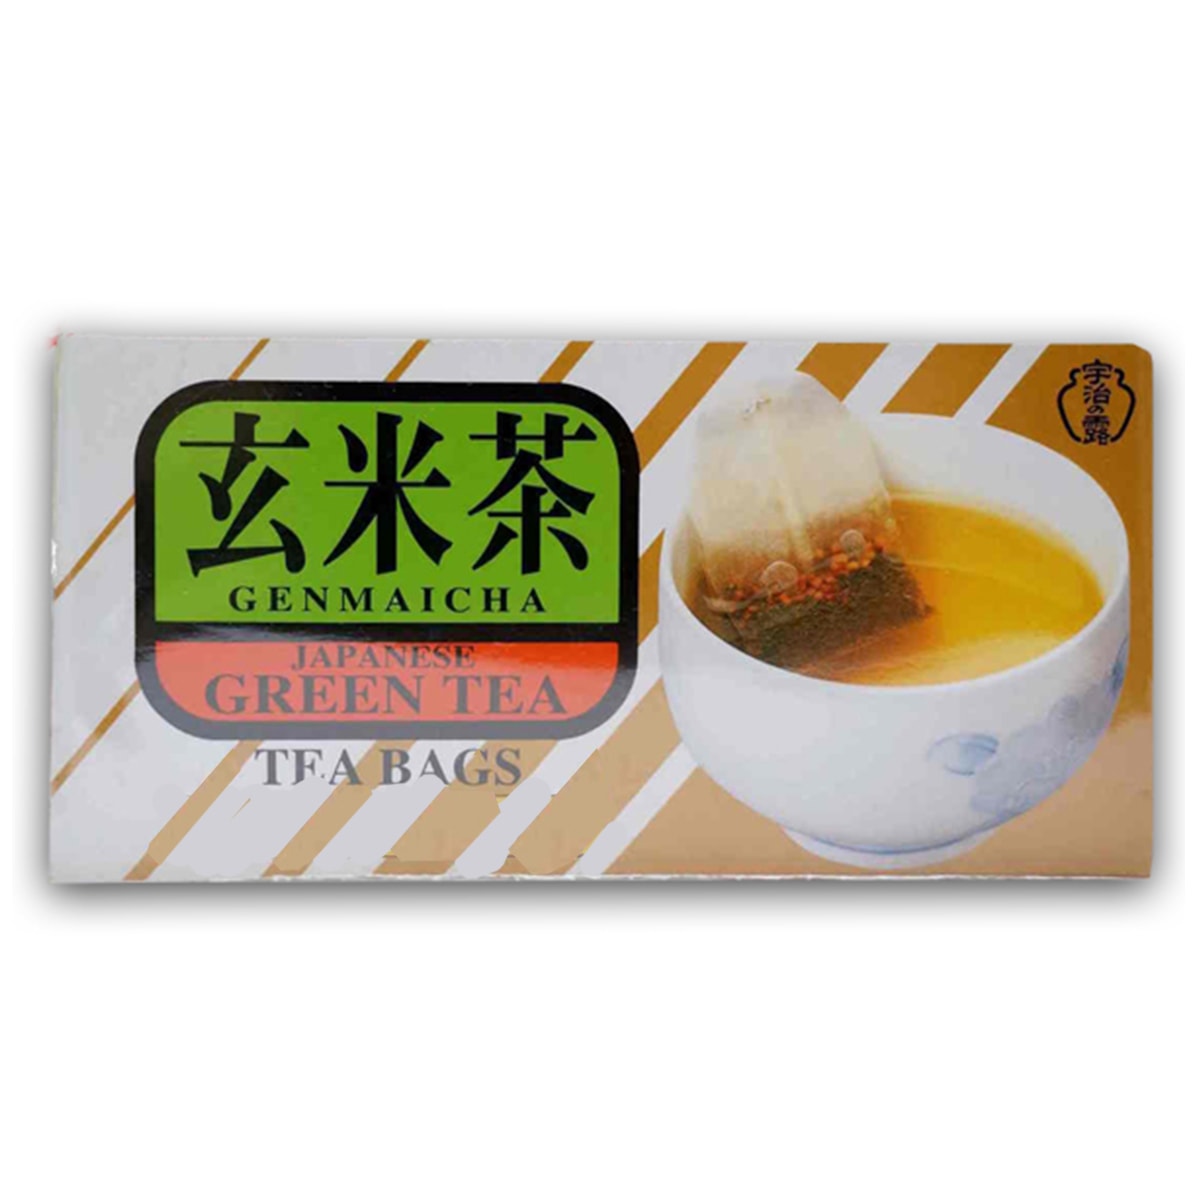 Buy Ujinotsuyu Japanese Green Tea with Roasted Rice (Genmaicha) (20 Teabags) - 40 gm